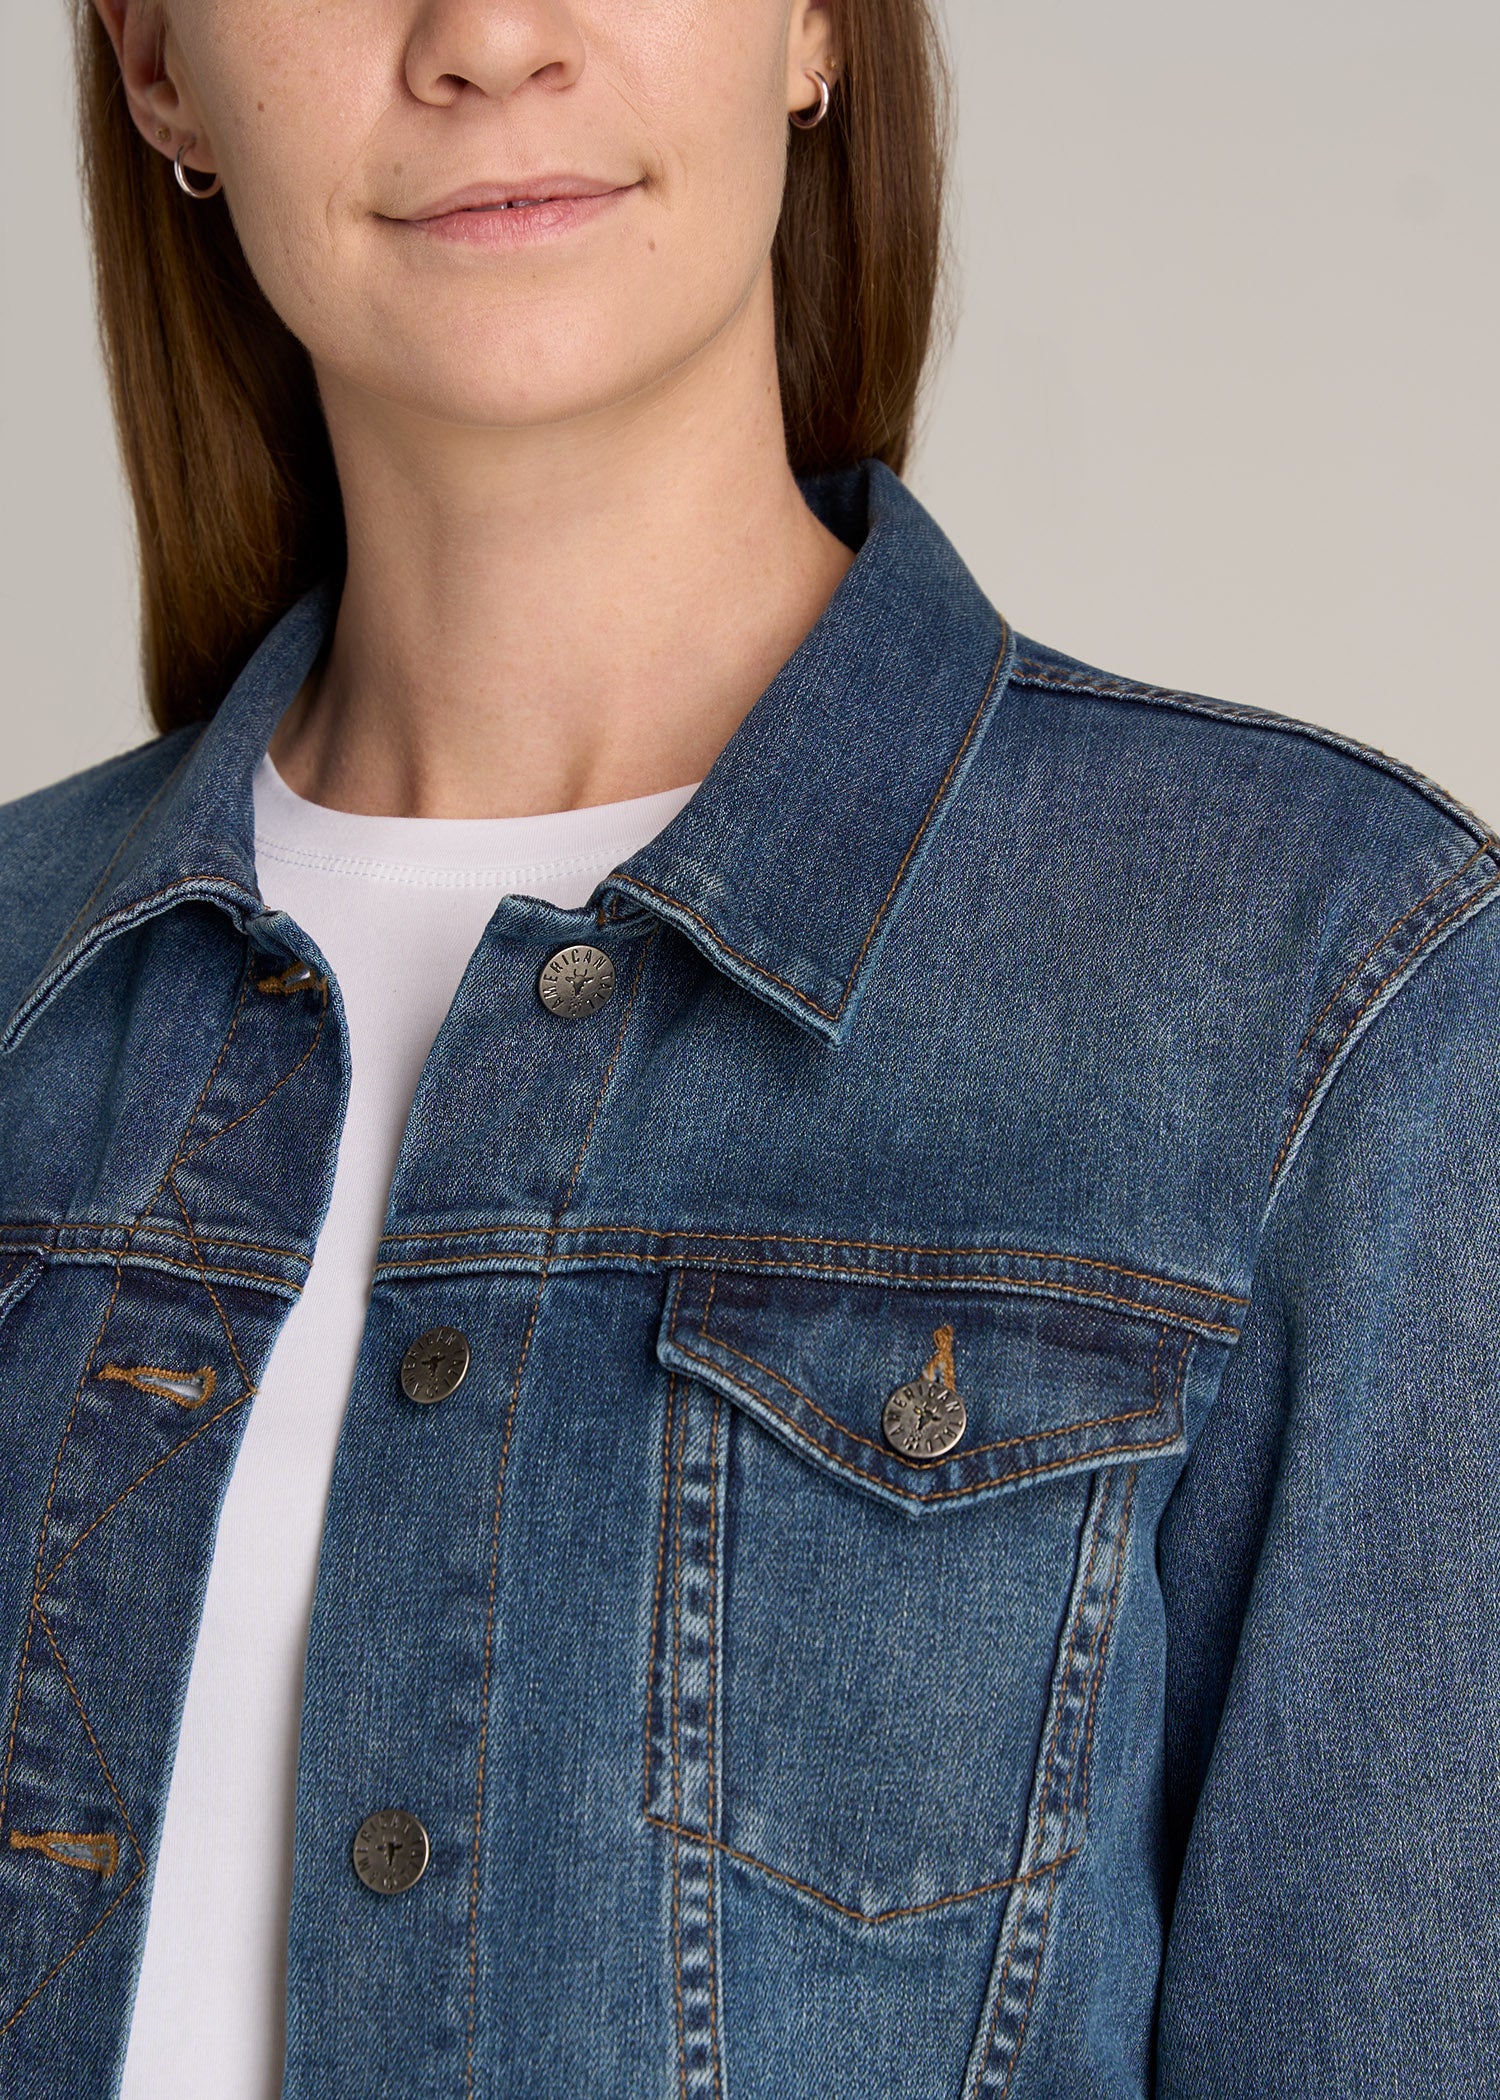 27 best denim jackets for women, plus pro shopping tips